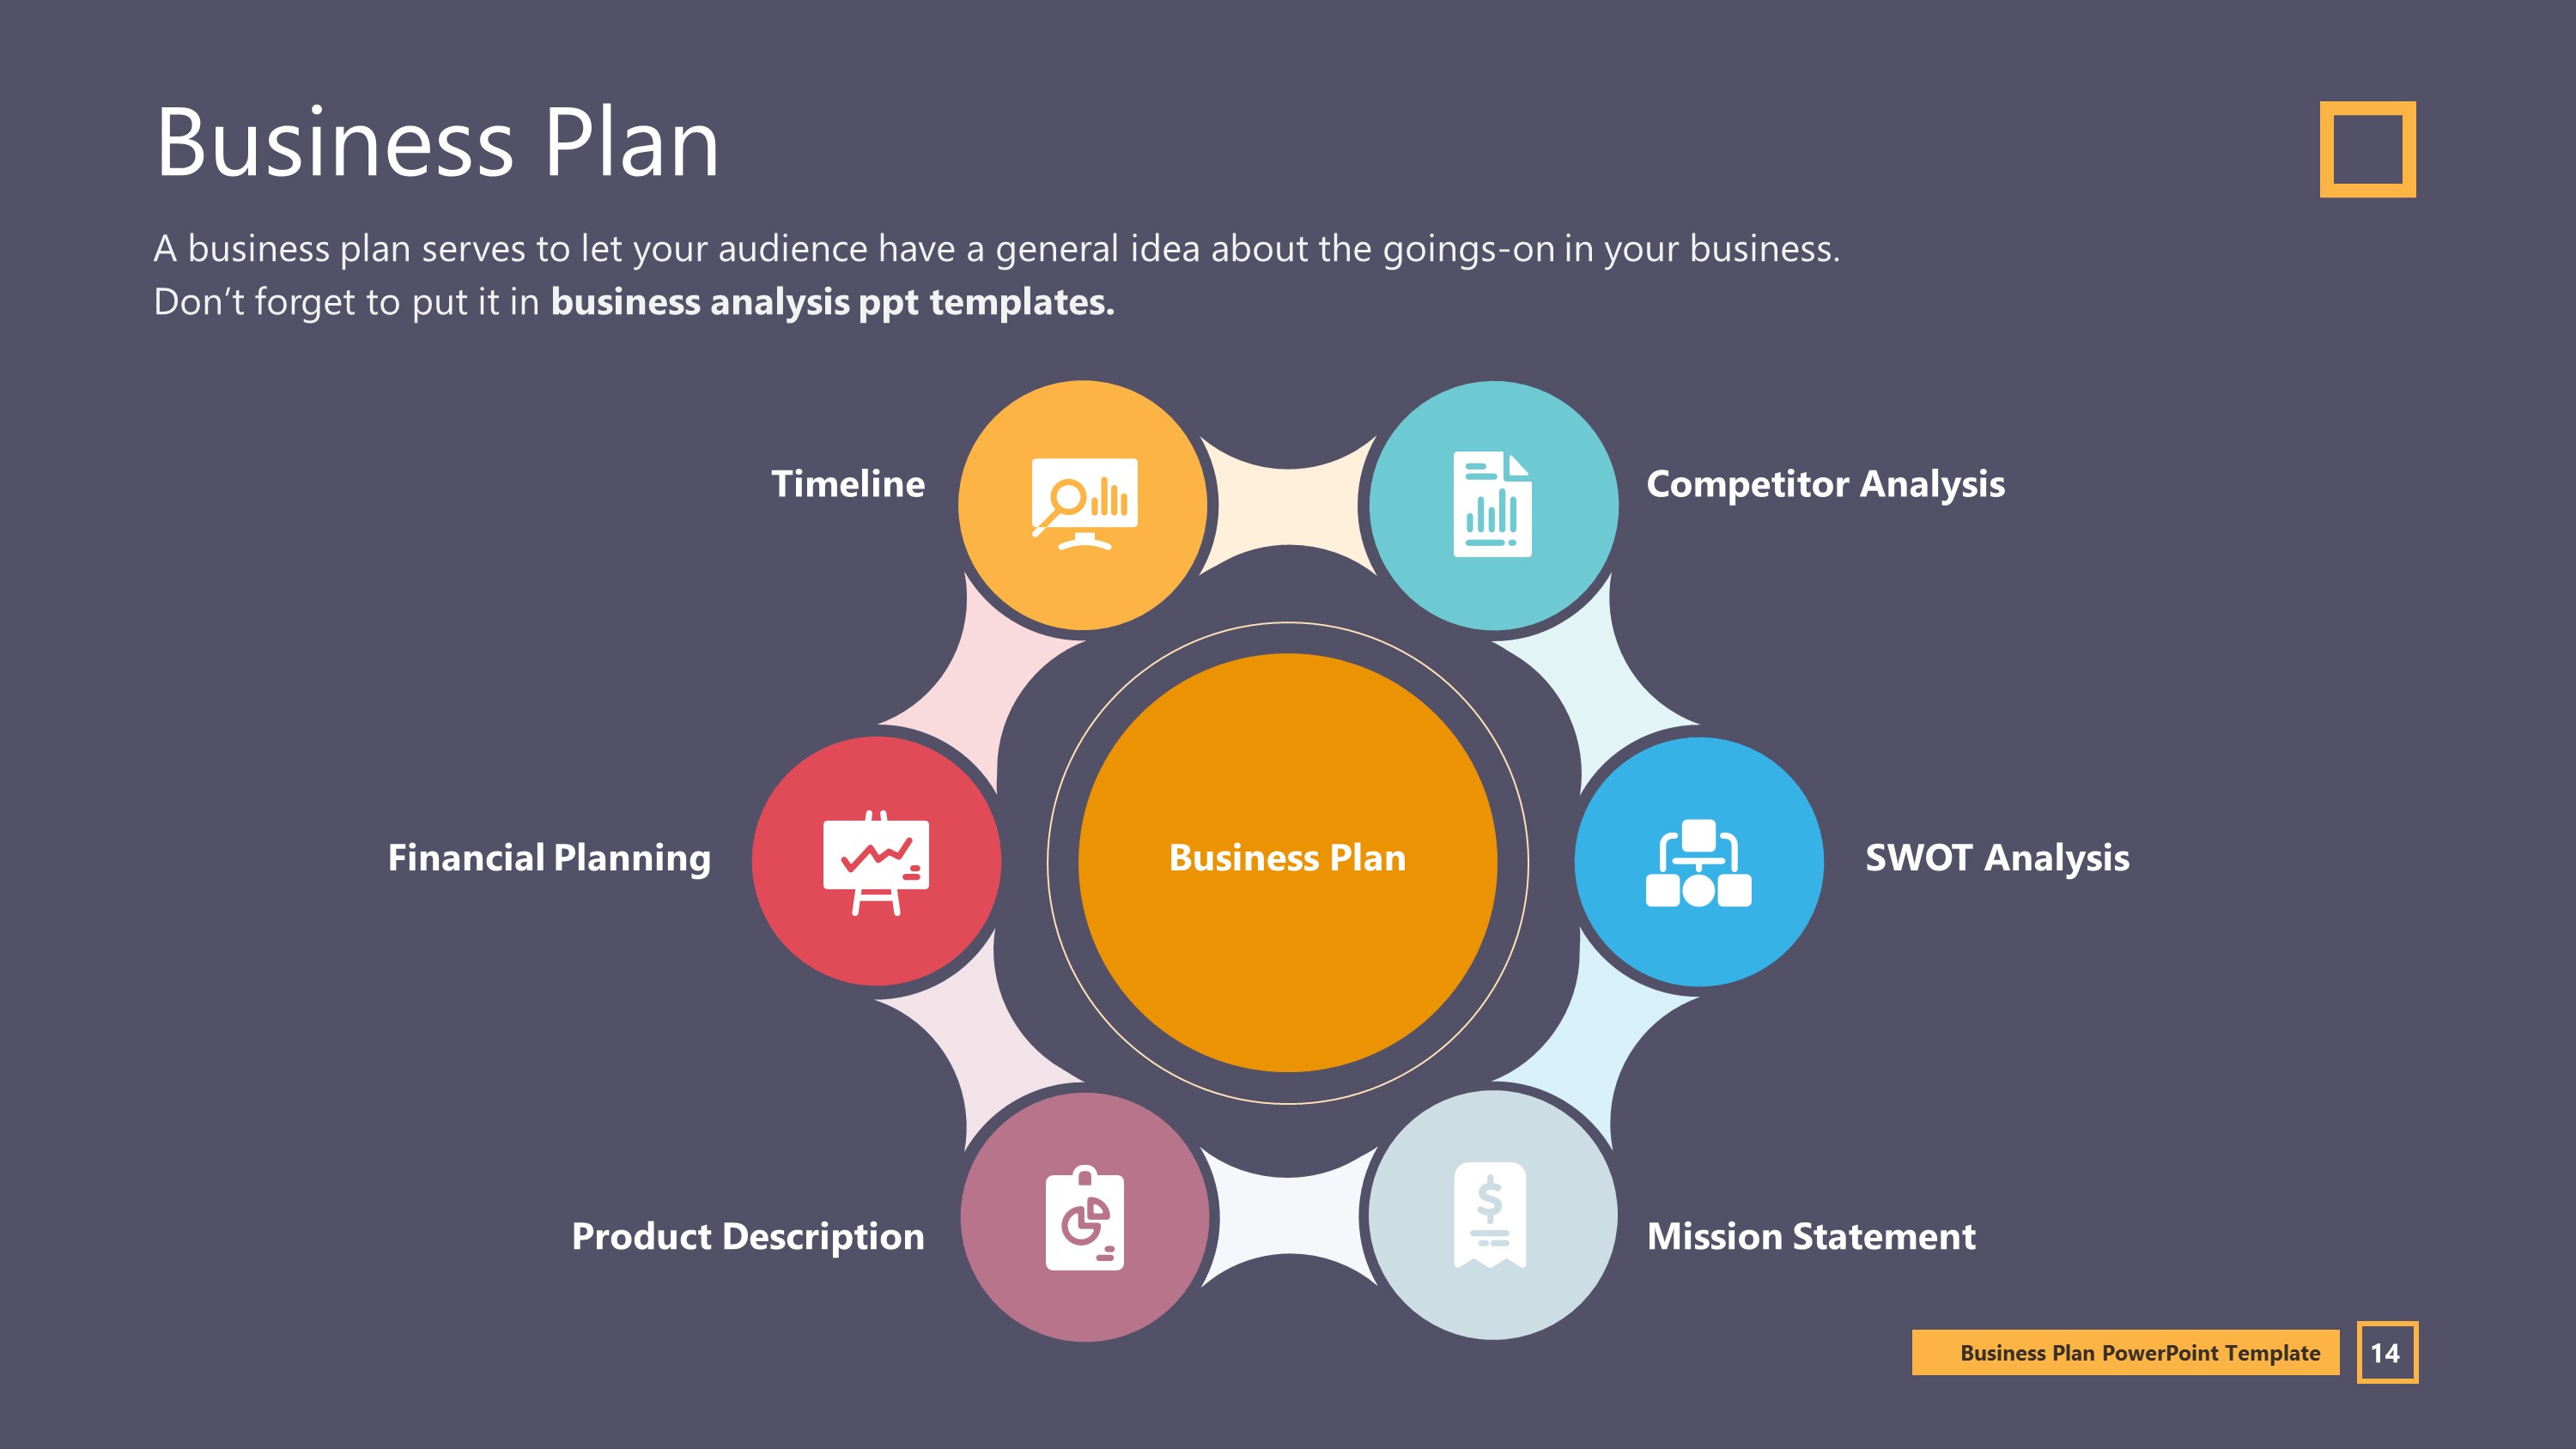 26863_Business_Plan_Premium_PowerPoint_Template_Slide_14_Business_Plan.jpg